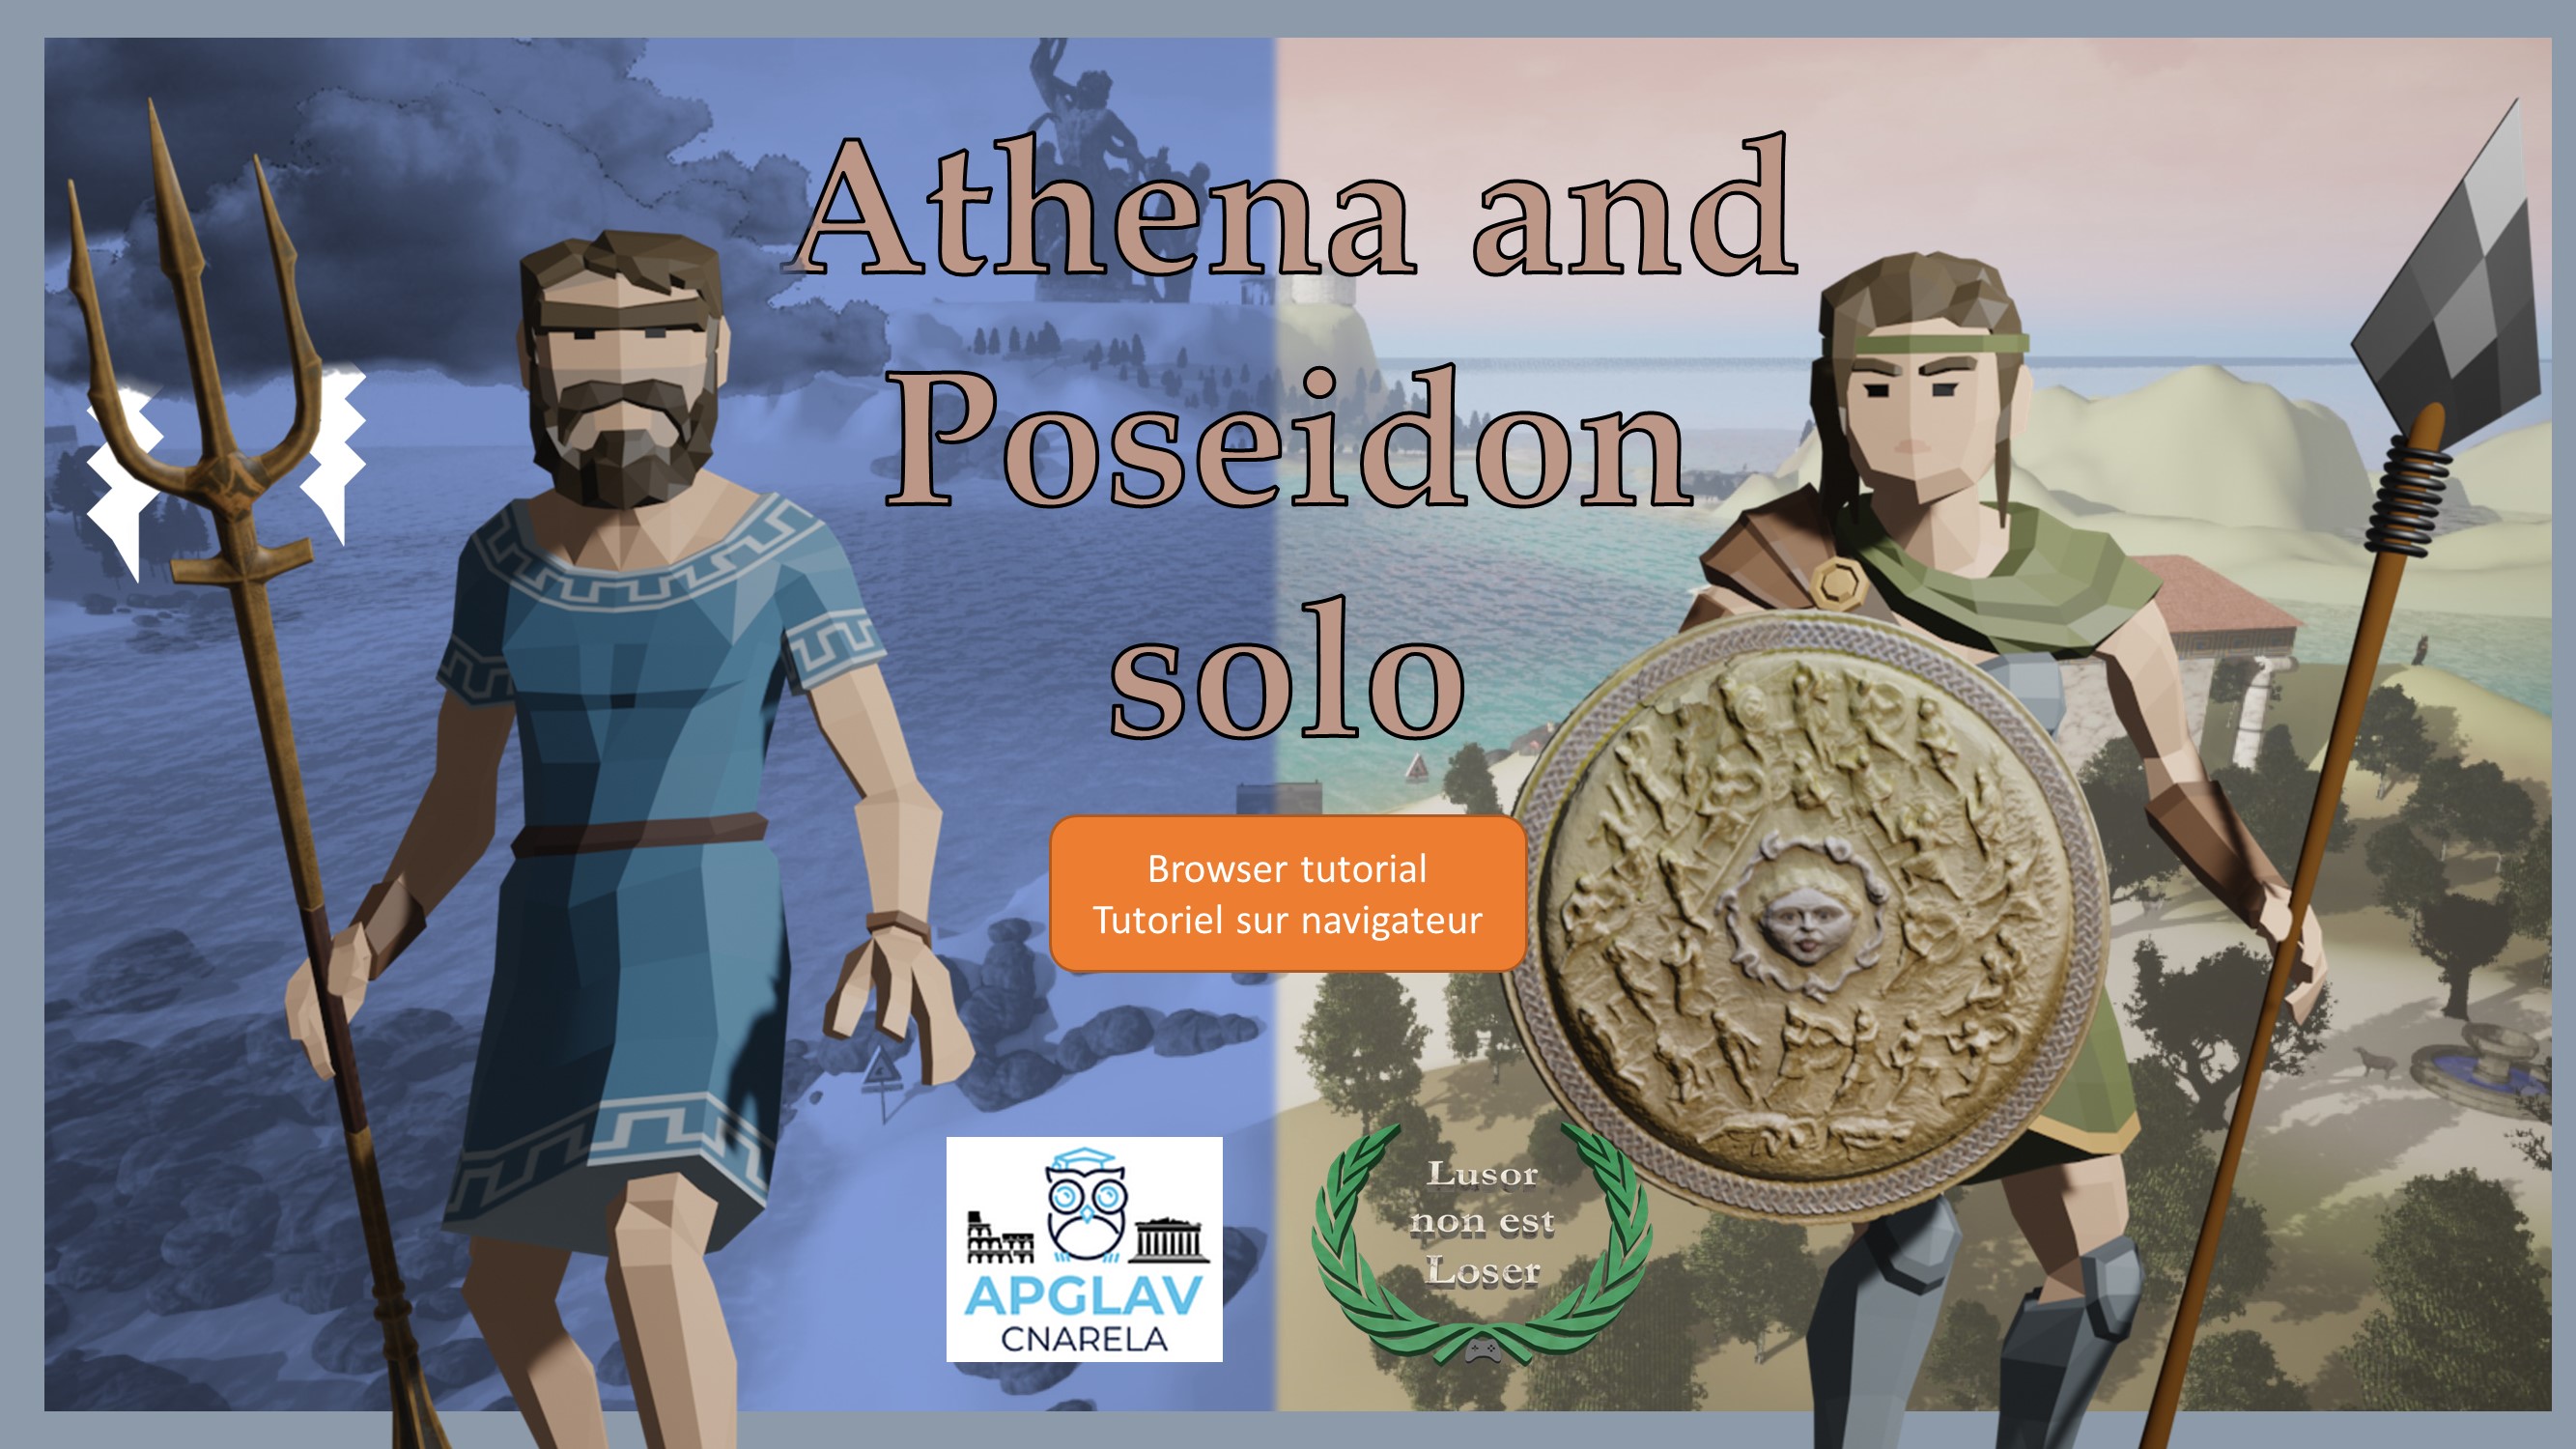 Athena and Poseidon Solo videogame